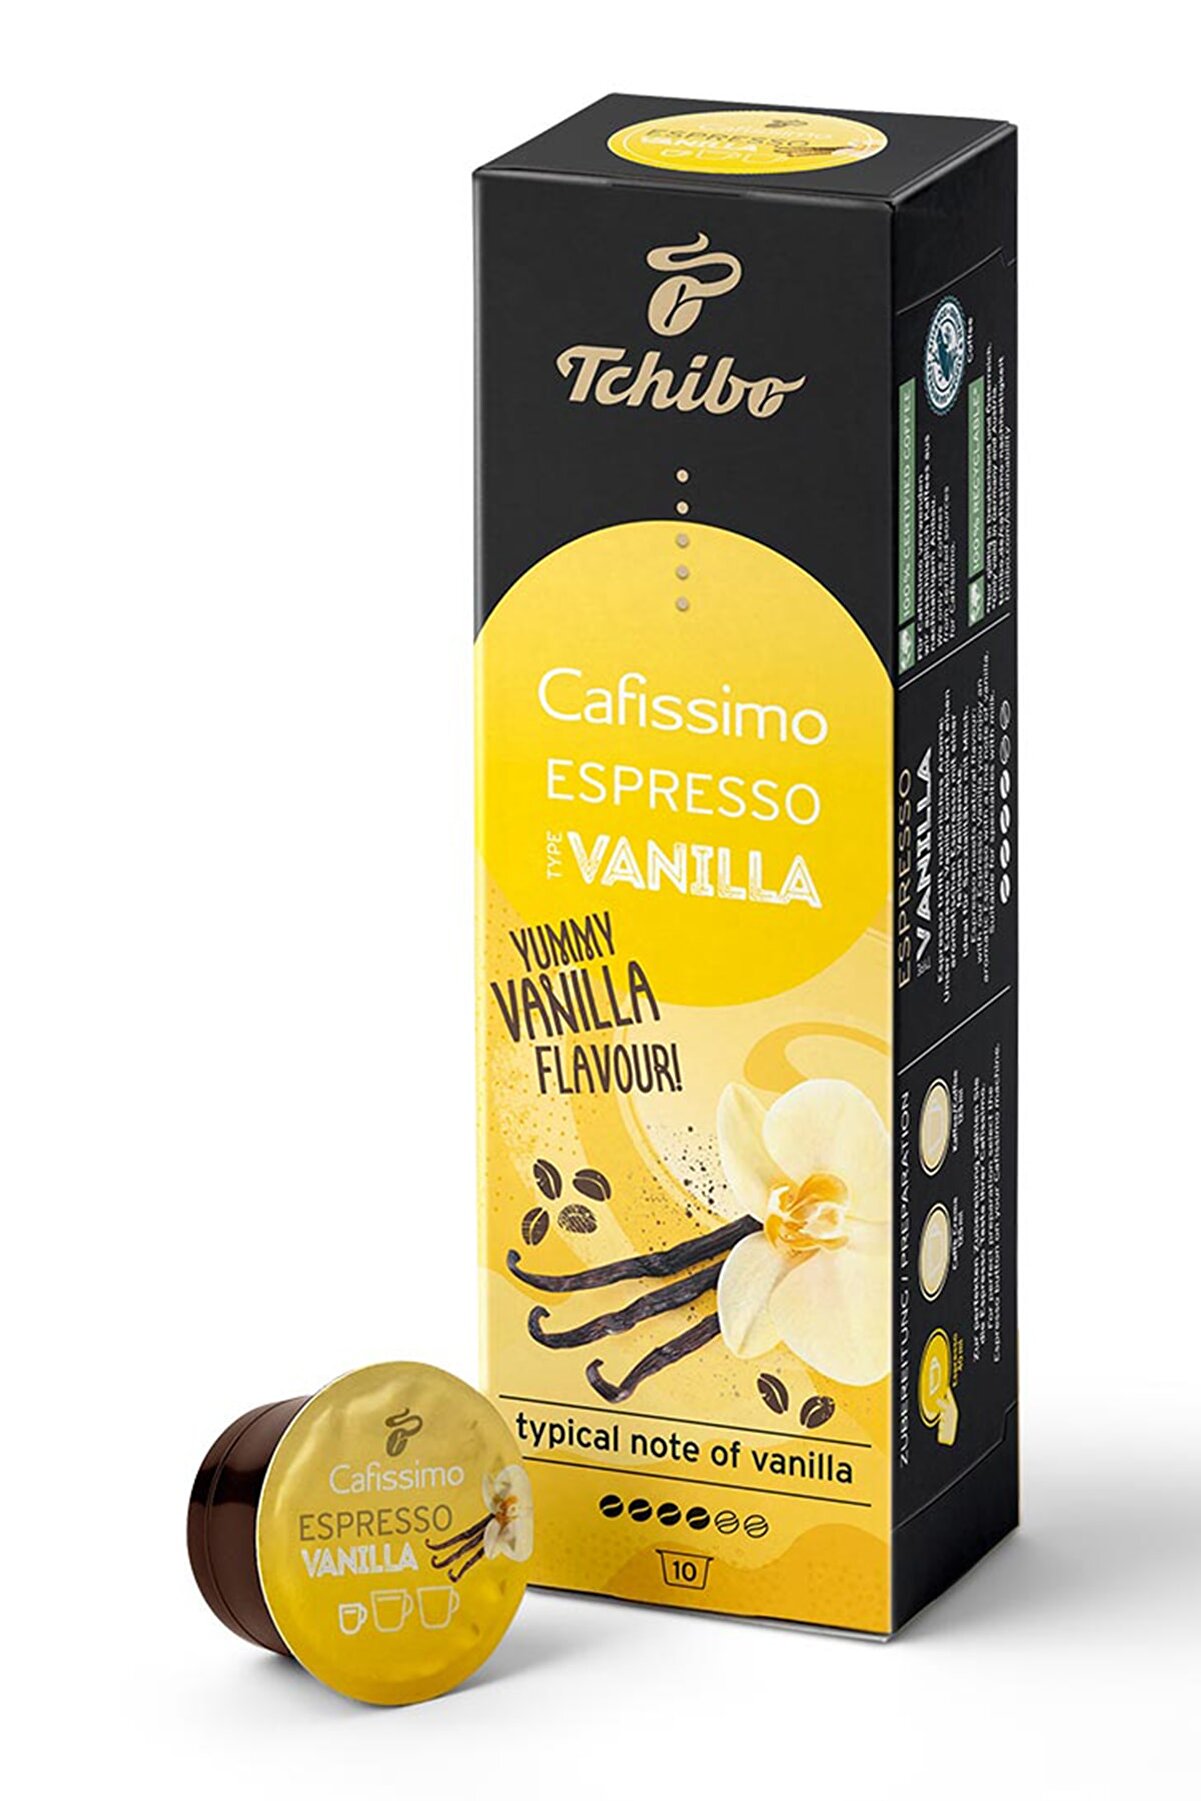 Tchibo Cafissimo Espresso Vanilla 10 Adet Kapsül Kahve